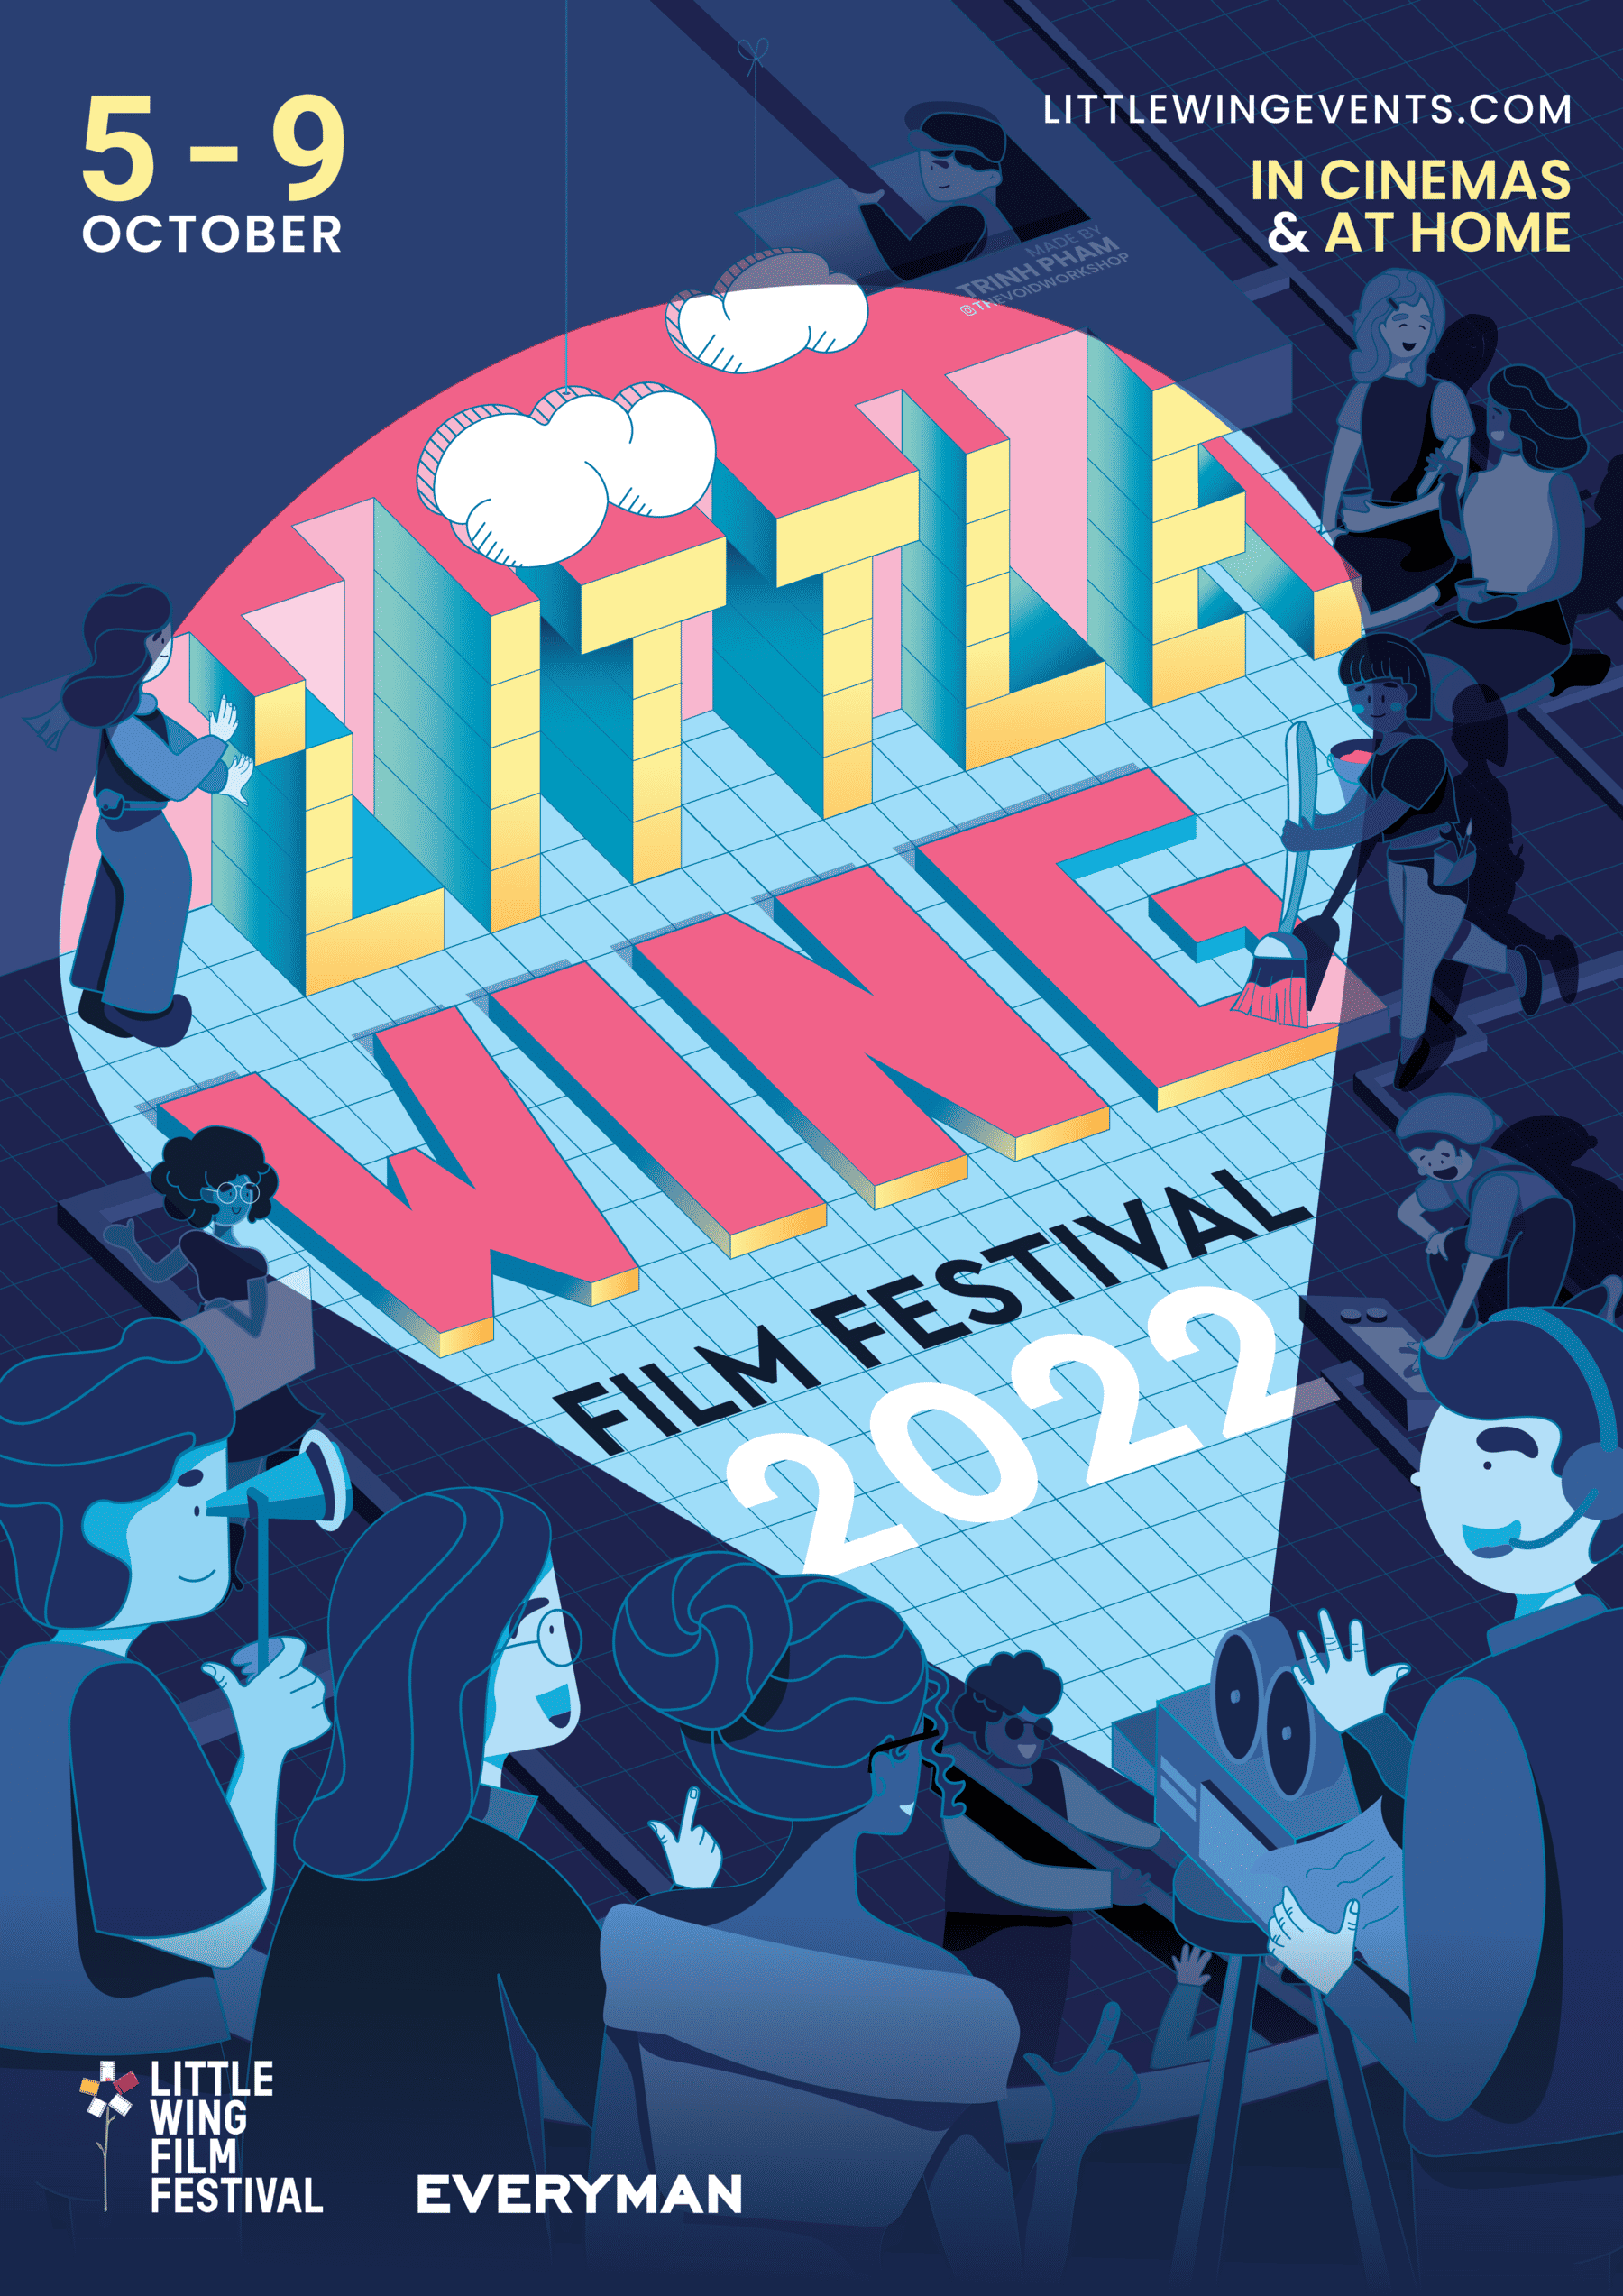 Little Wing Film Festival